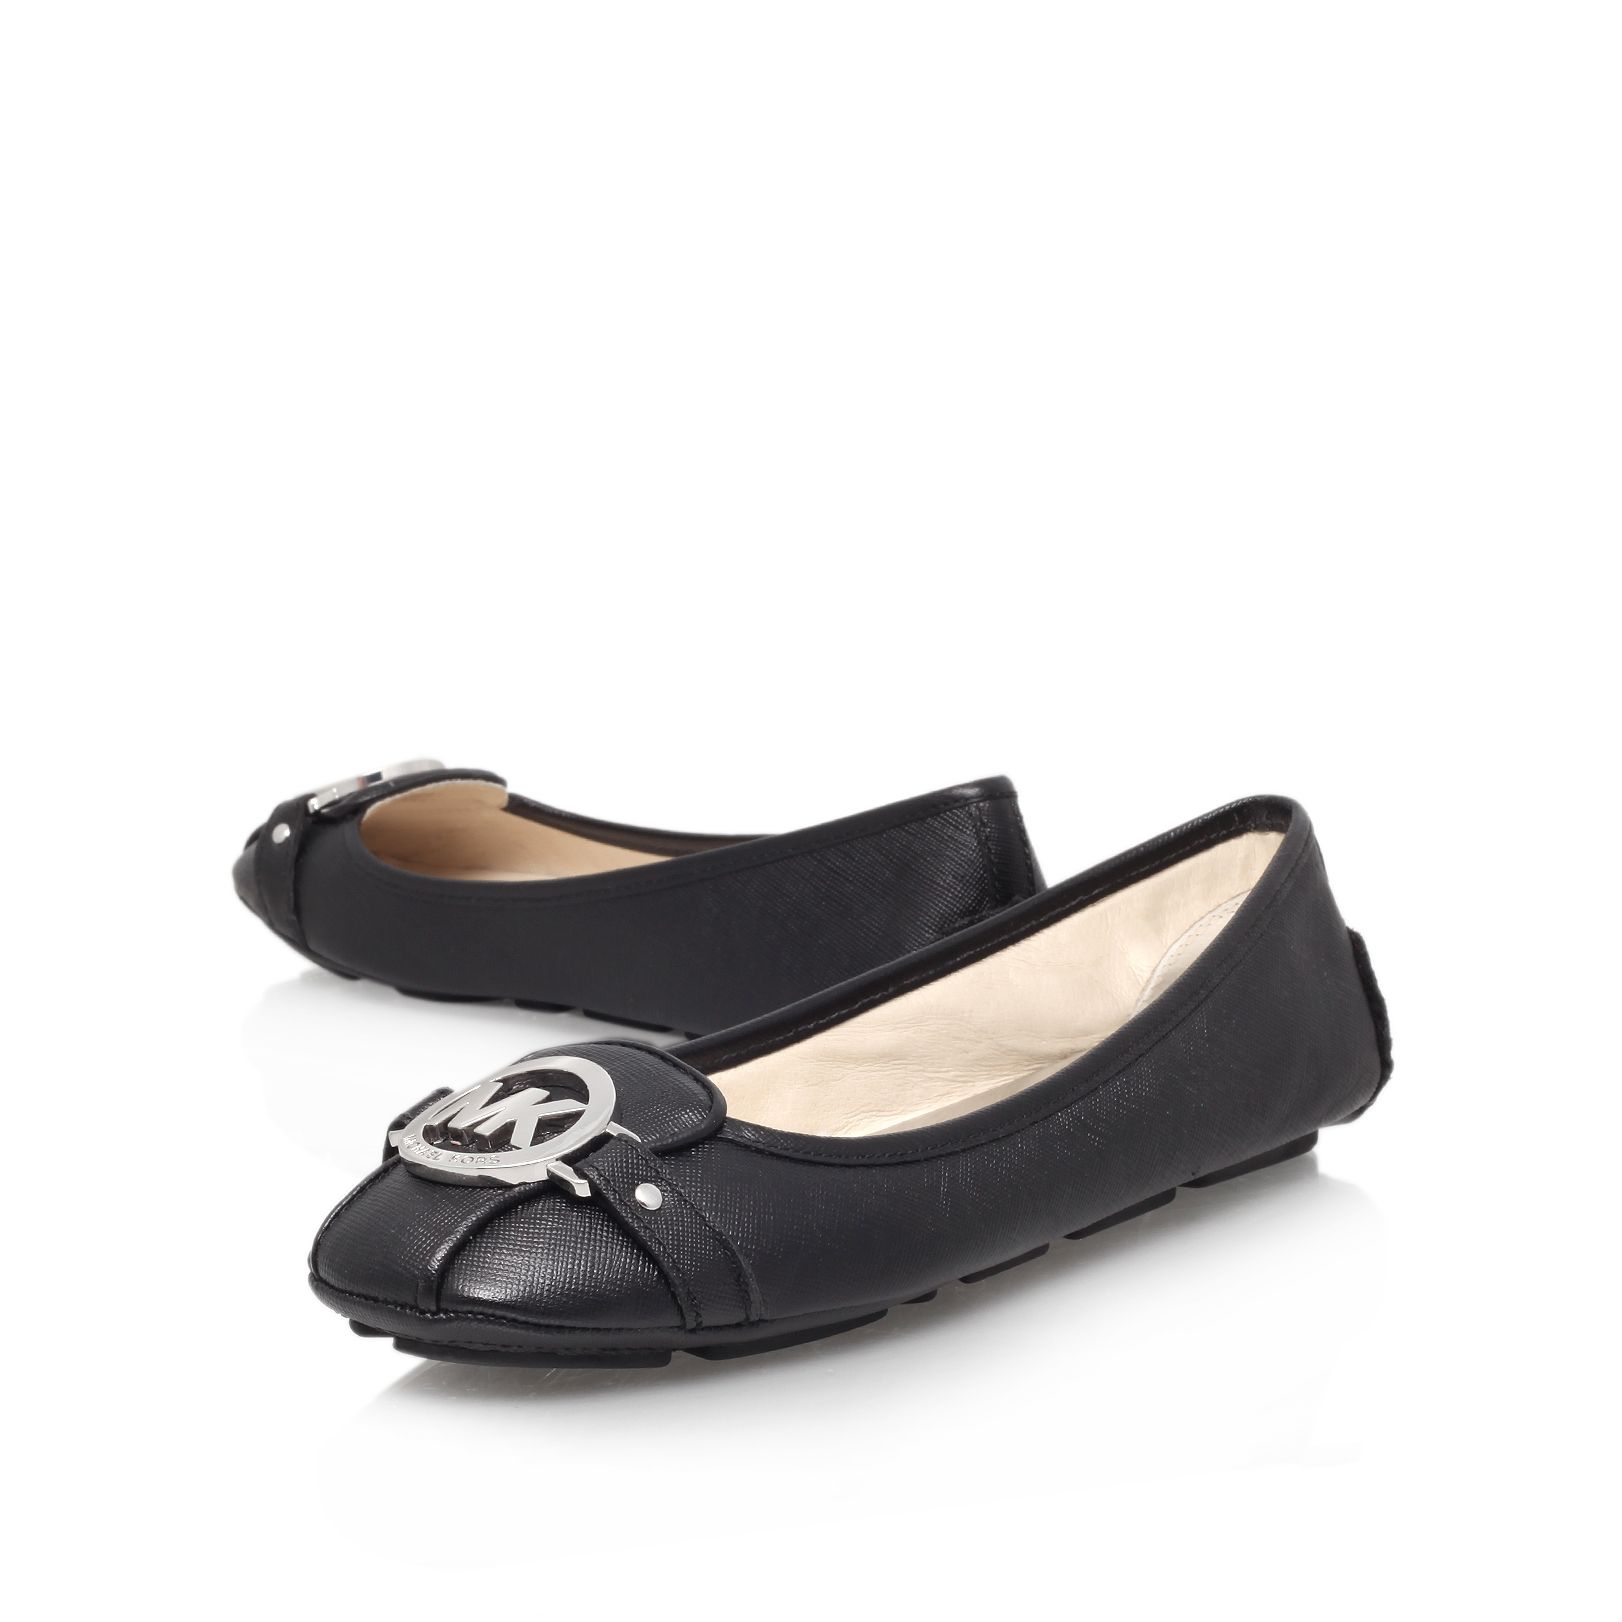 Michael Kors Fulton Moc Flat Court Shoes in Black | Lyst